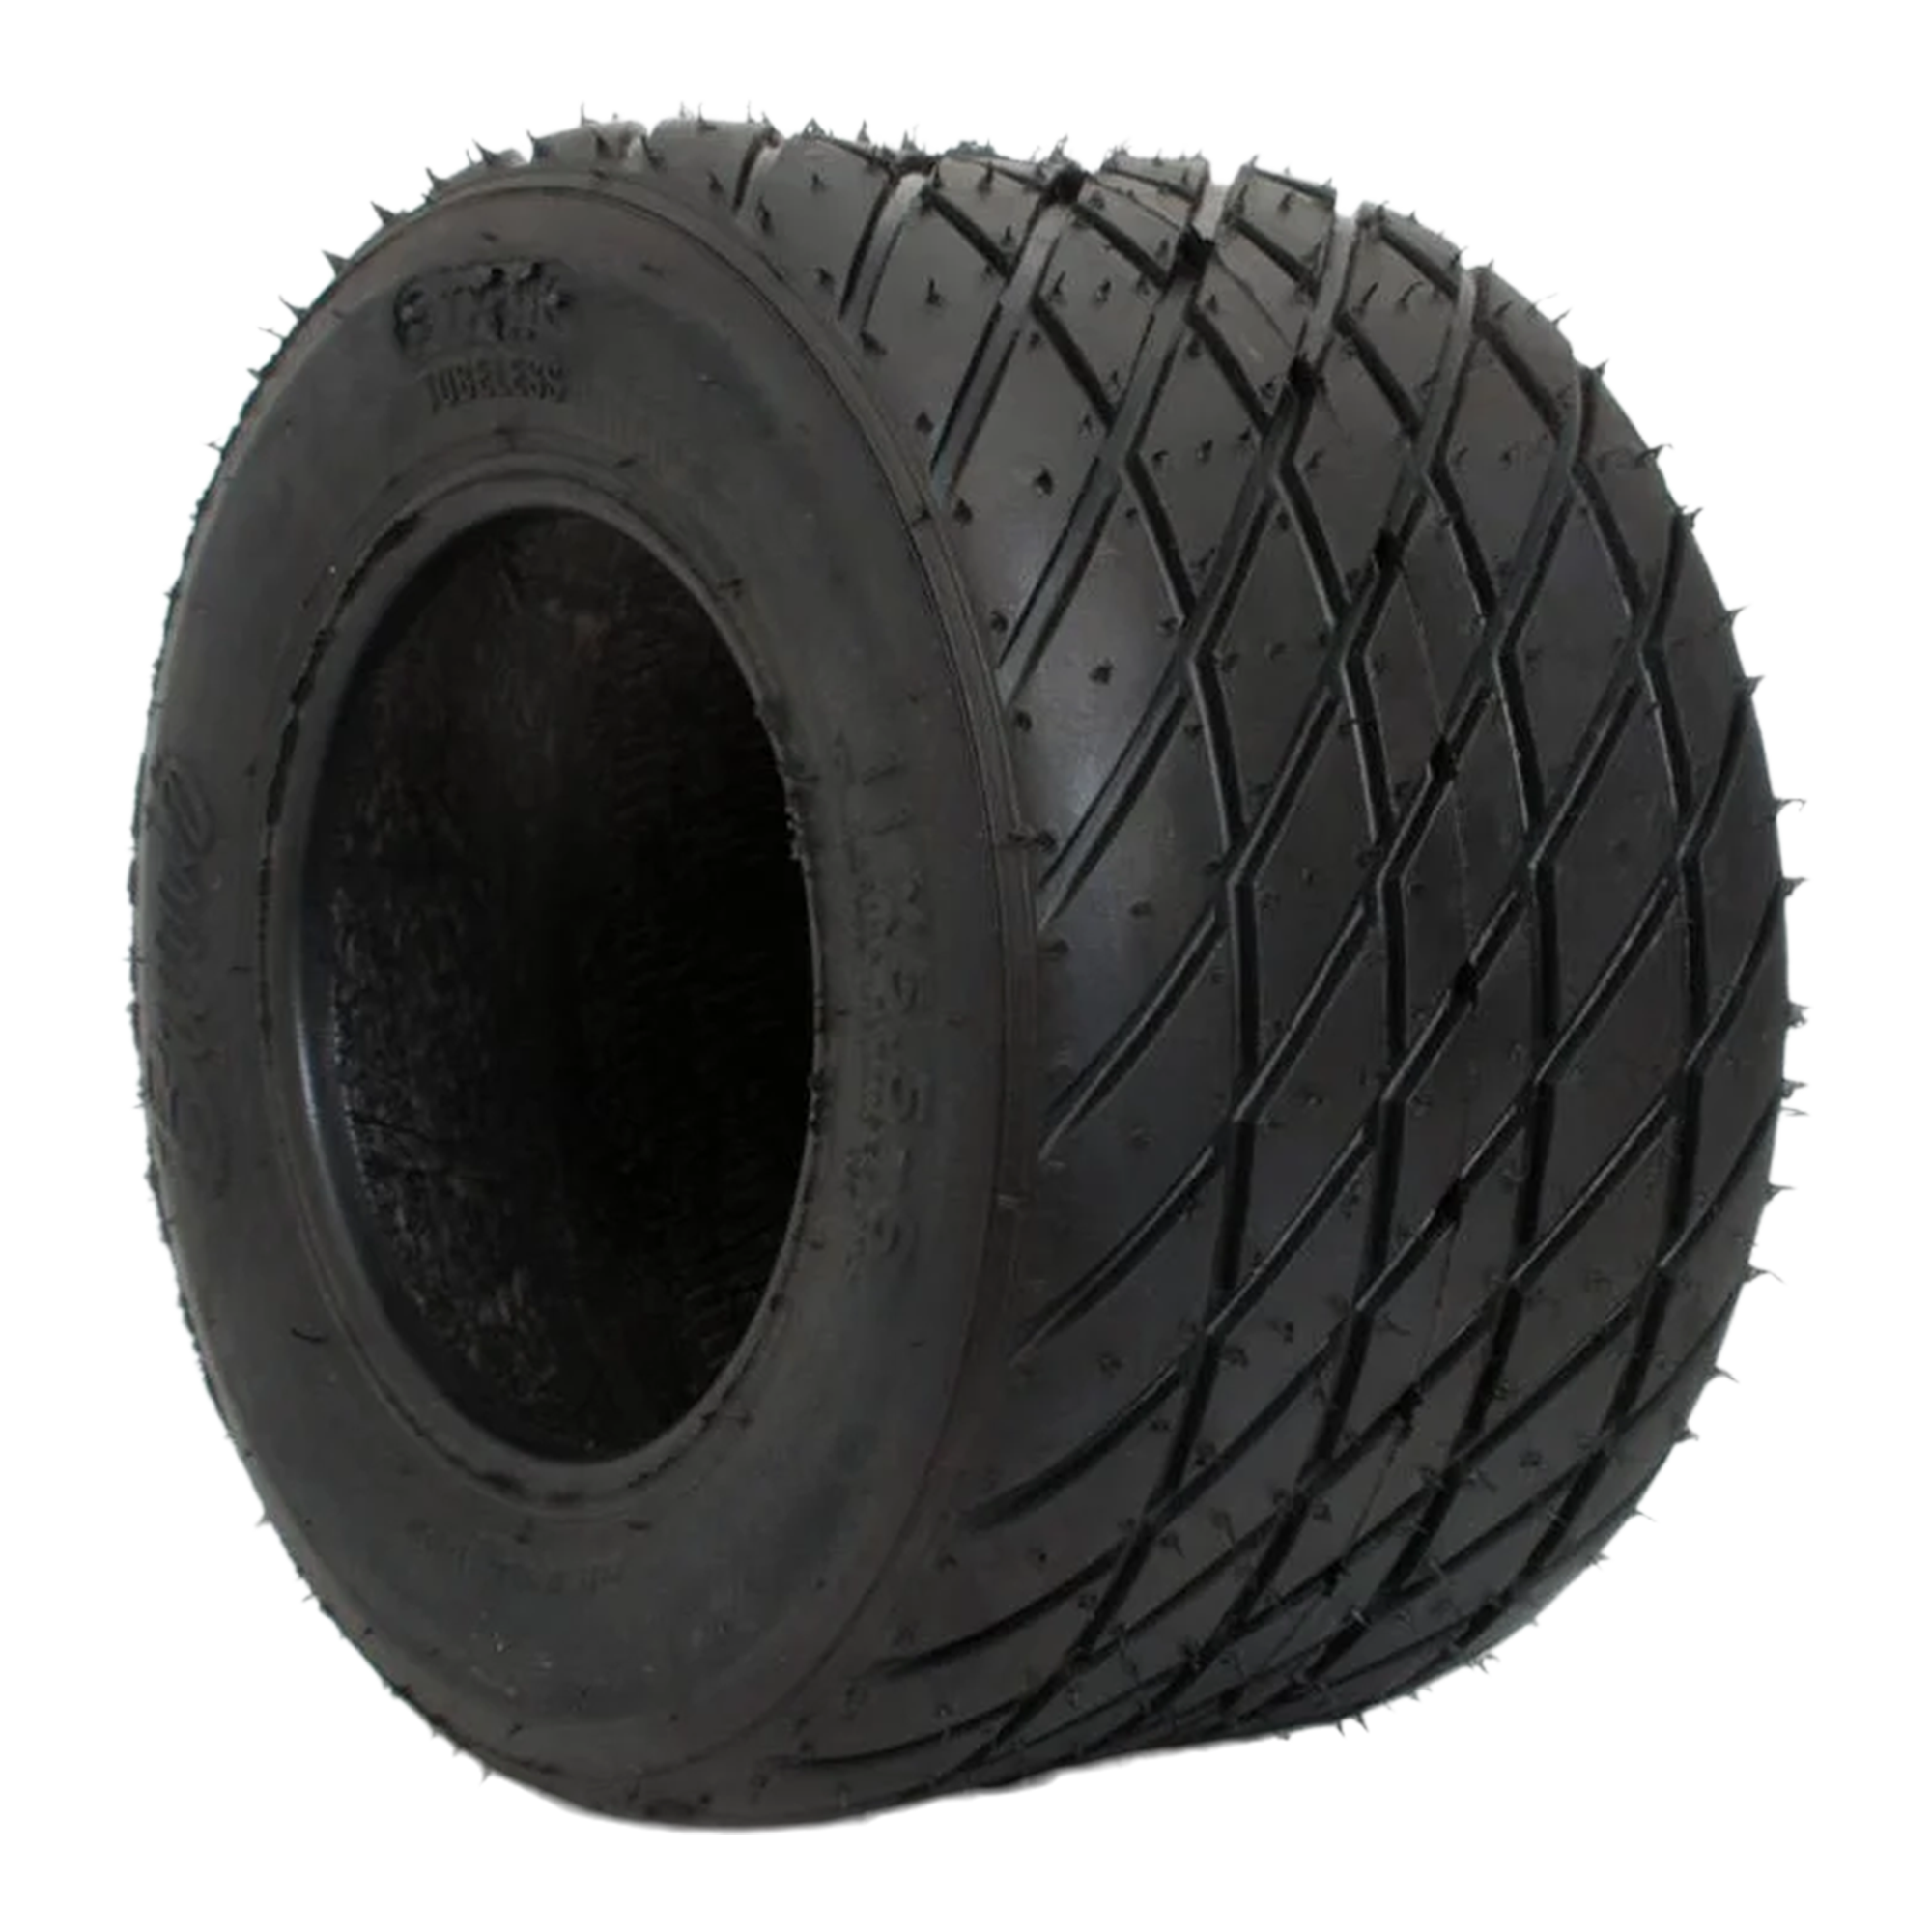 Burris Grooved Dirt Tires